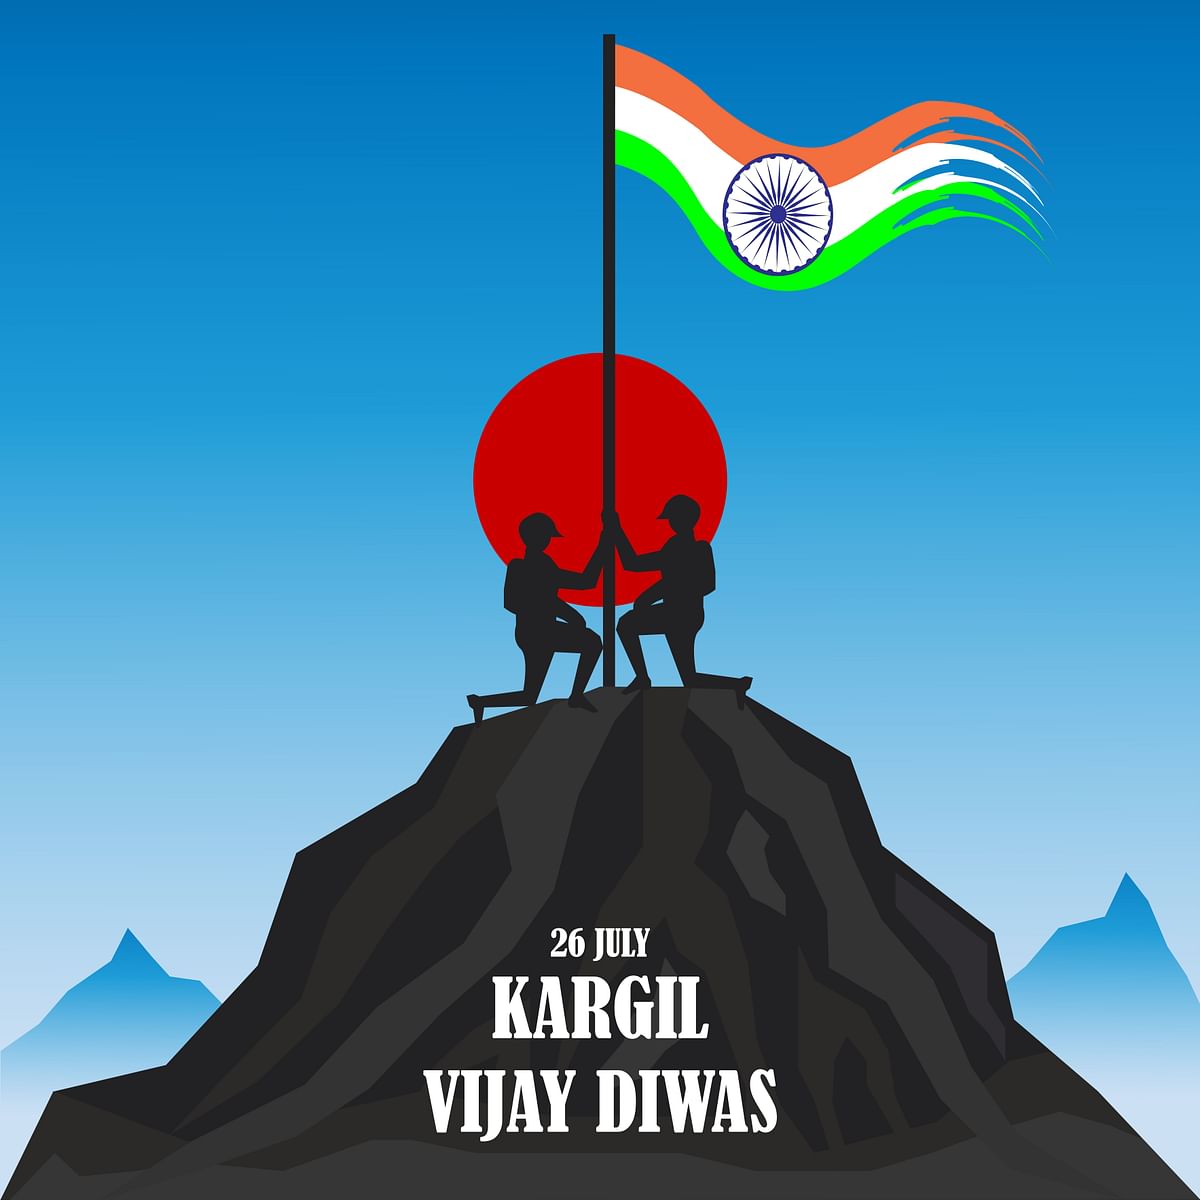 Kargil Vijay Diwas: This year, marks the 22nd anniversary of India's victory in the Kargil War